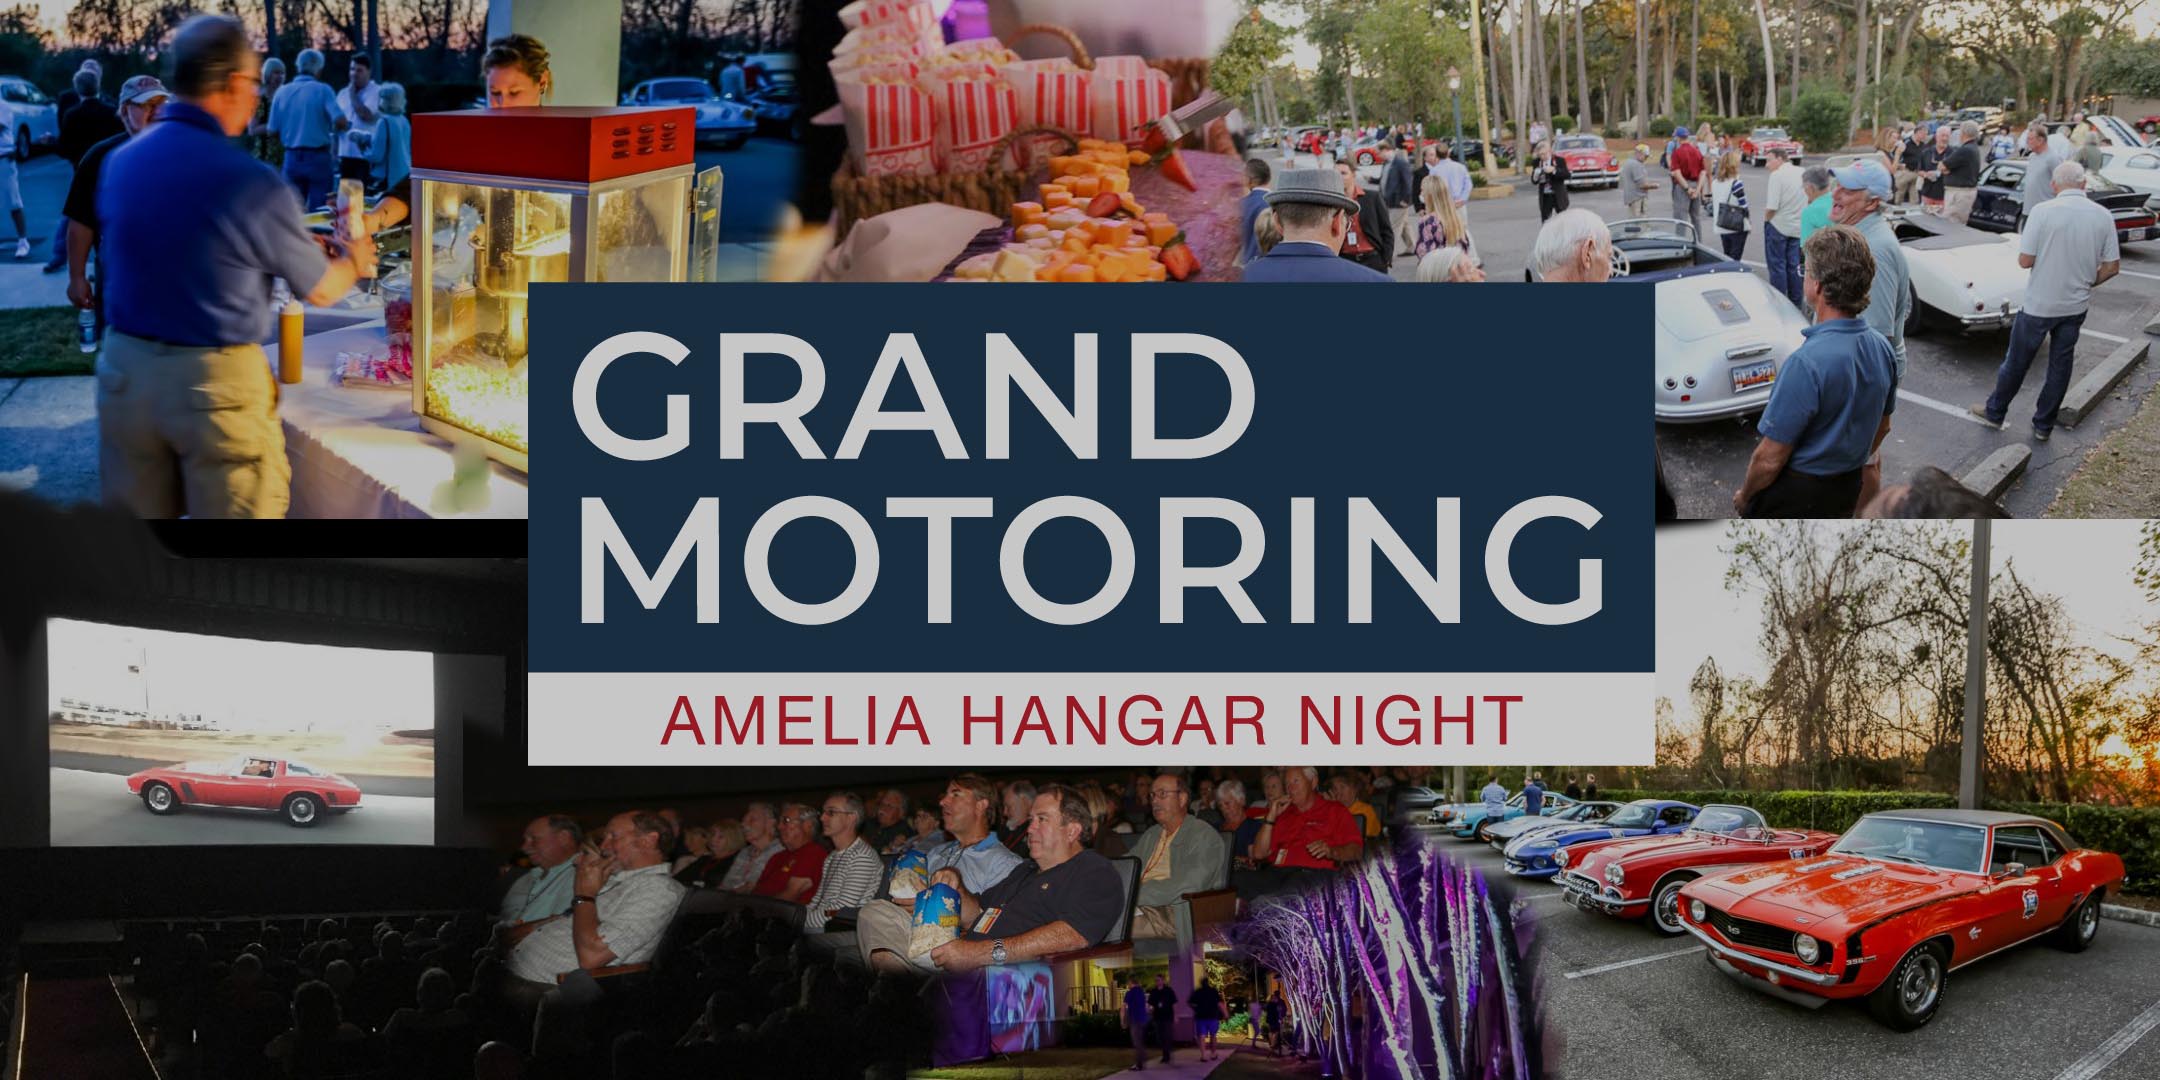 All roads lead to "Amelia's Grand Motoring Hangar Night ...